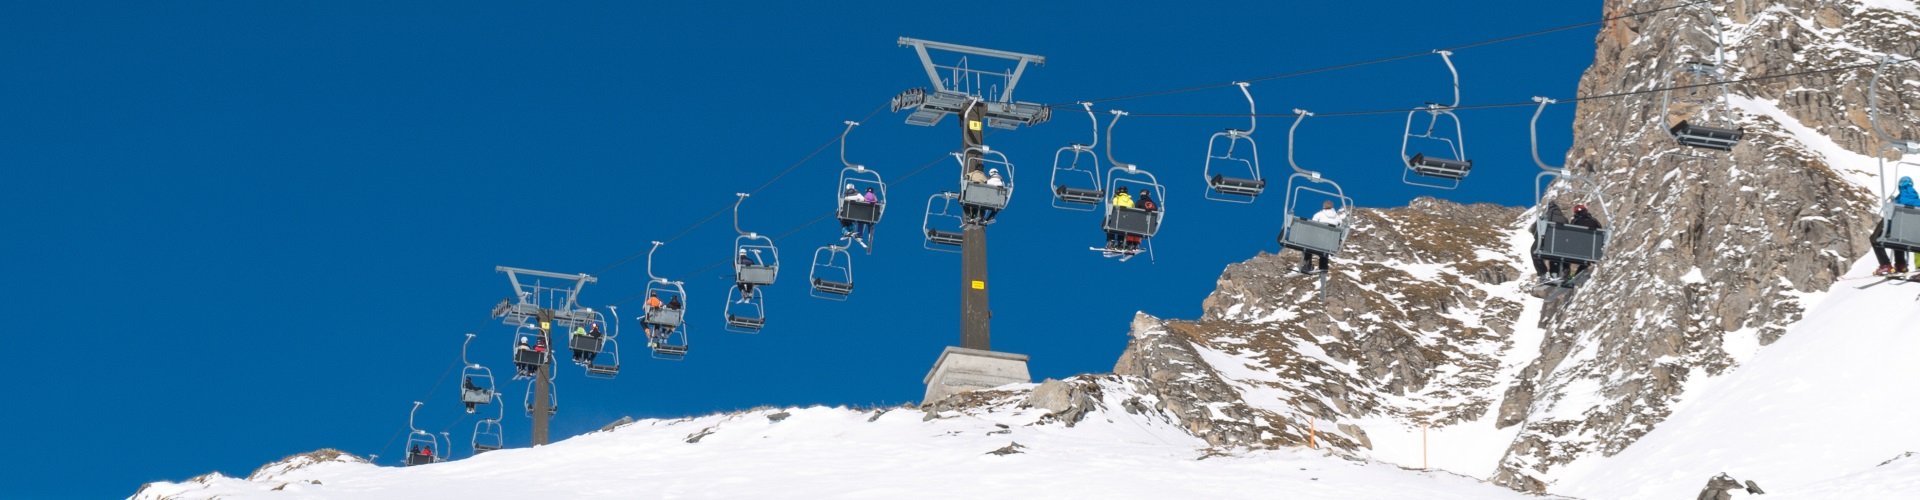 Skiverbund Ski amadé